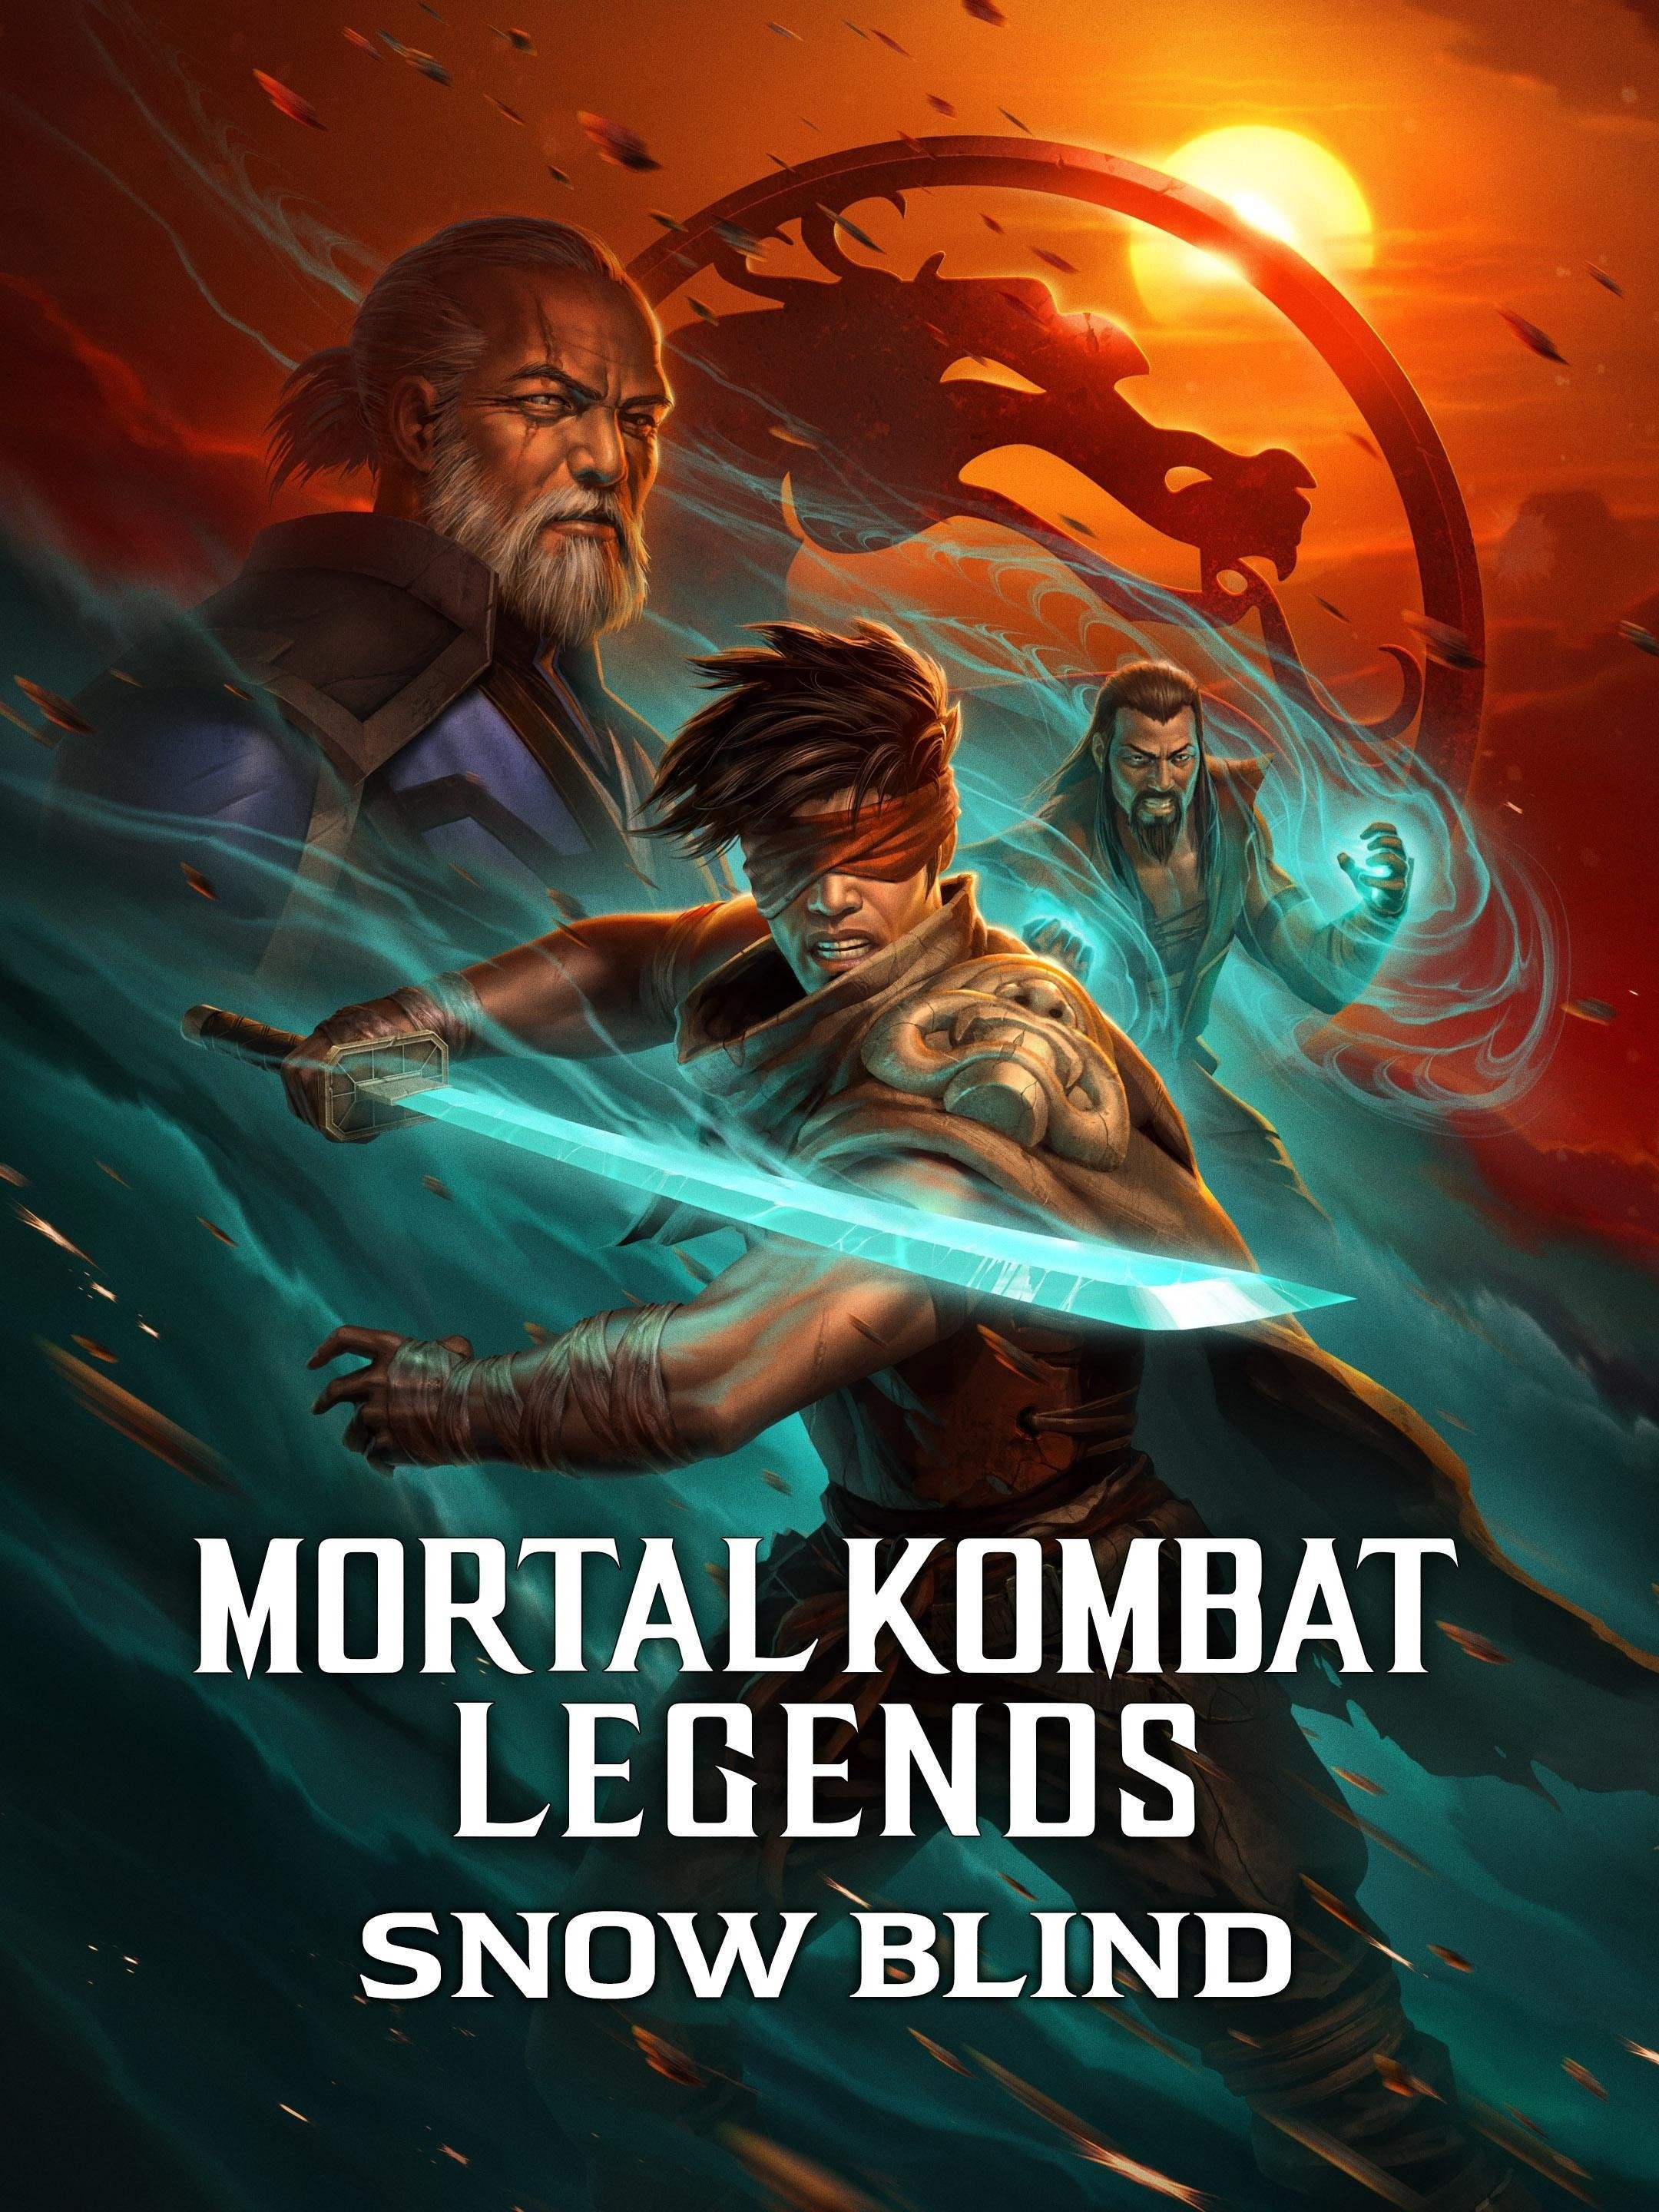 Mortal Kombat: Legacy - streaming tv show online